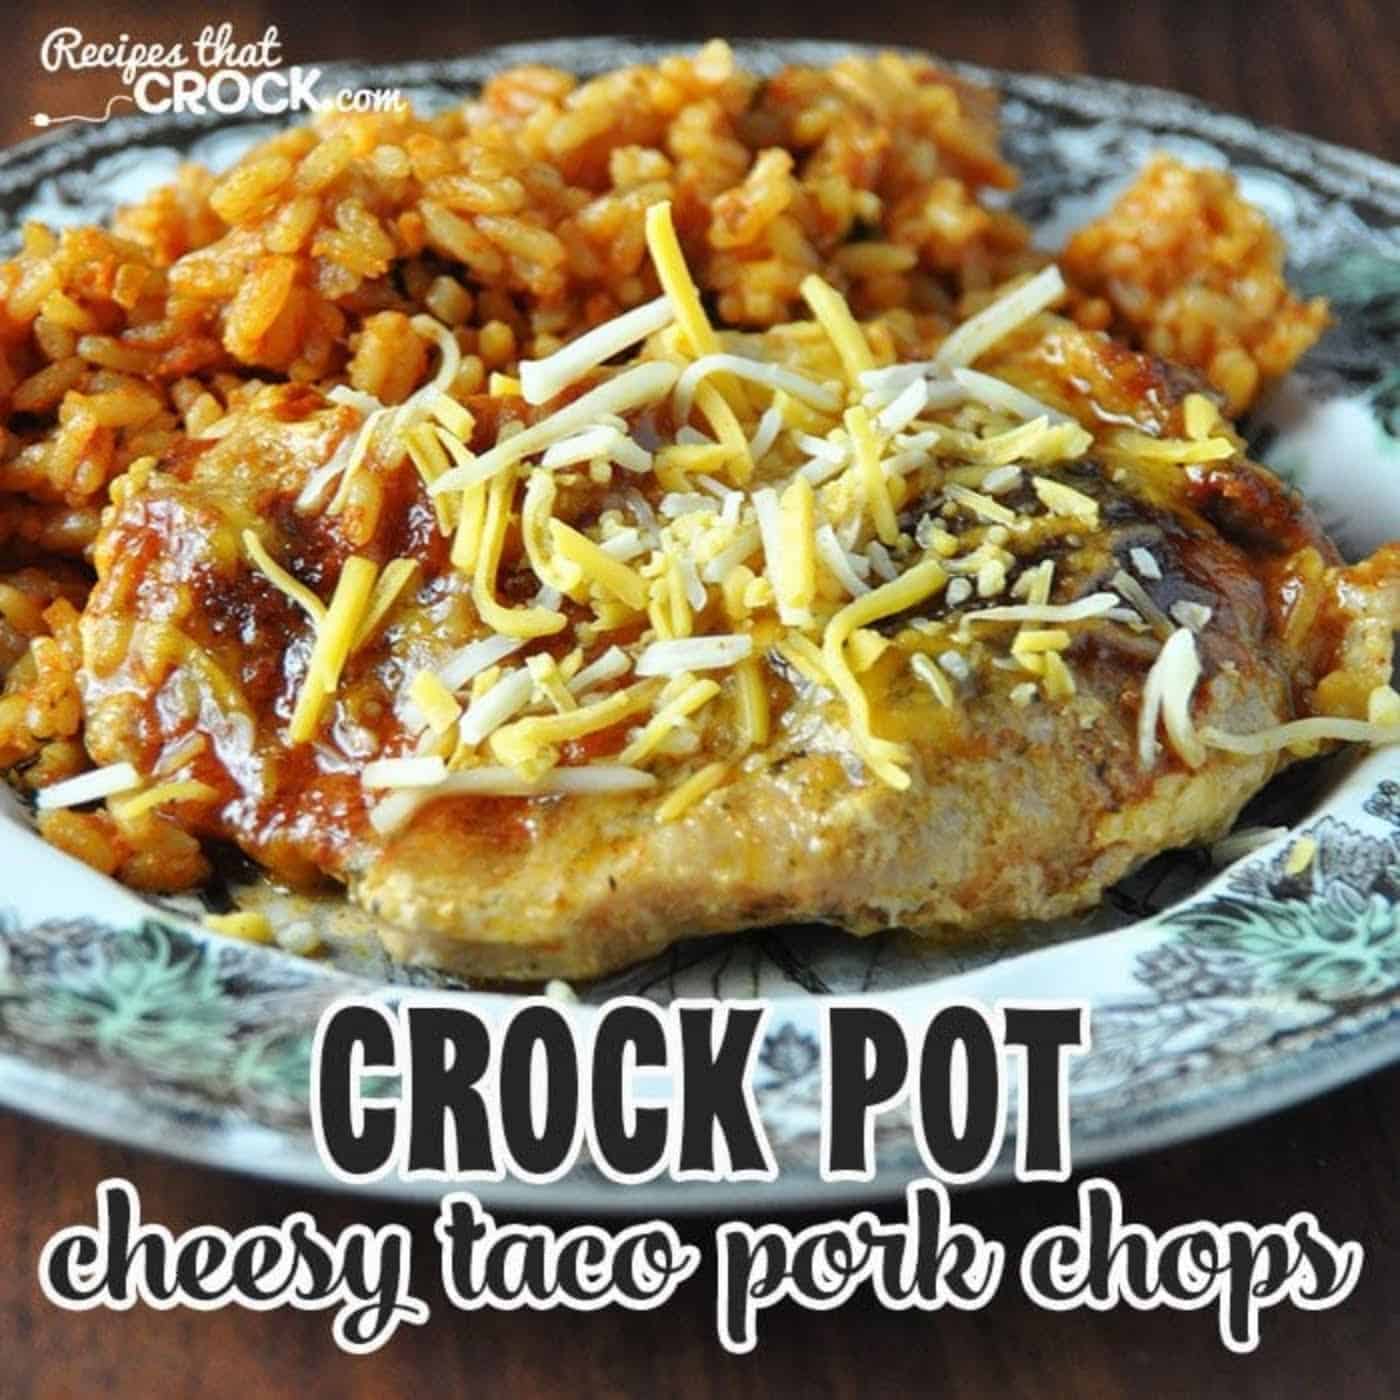 Crock-Pot Cheesy Taco Pork Chops